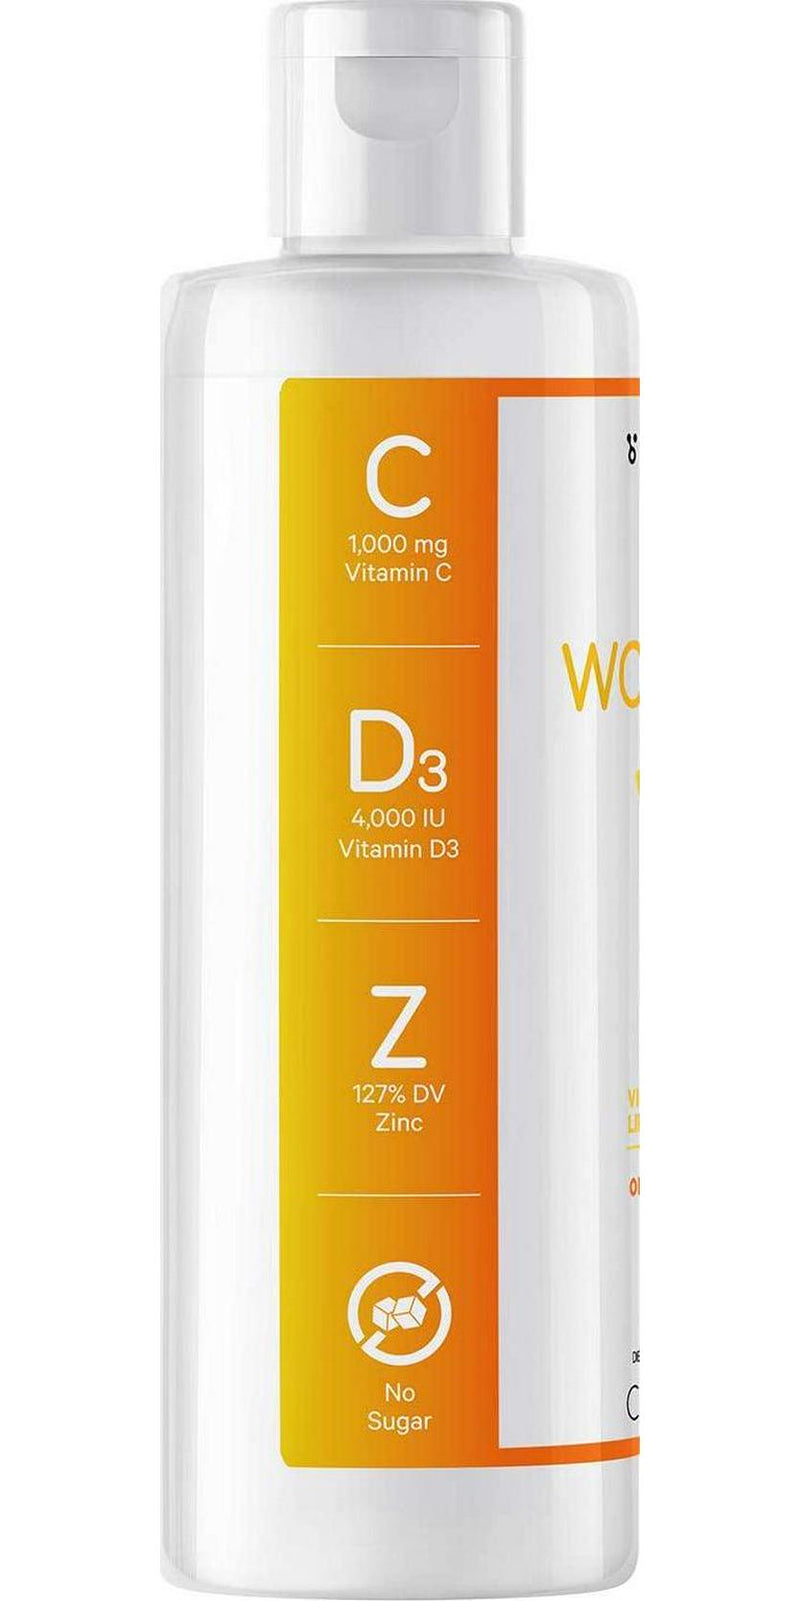 Nanofood Wonder-C Liposomal Vitamin C Liquid Supplement Vitamin D3, E and Zinc, Rose Hips, Quercetin and Echinacea, Non-GMO Liposomes Blend, Orange Tangerine Drops, 1000 mg Vitamin C Per Serving, 16 fl oz